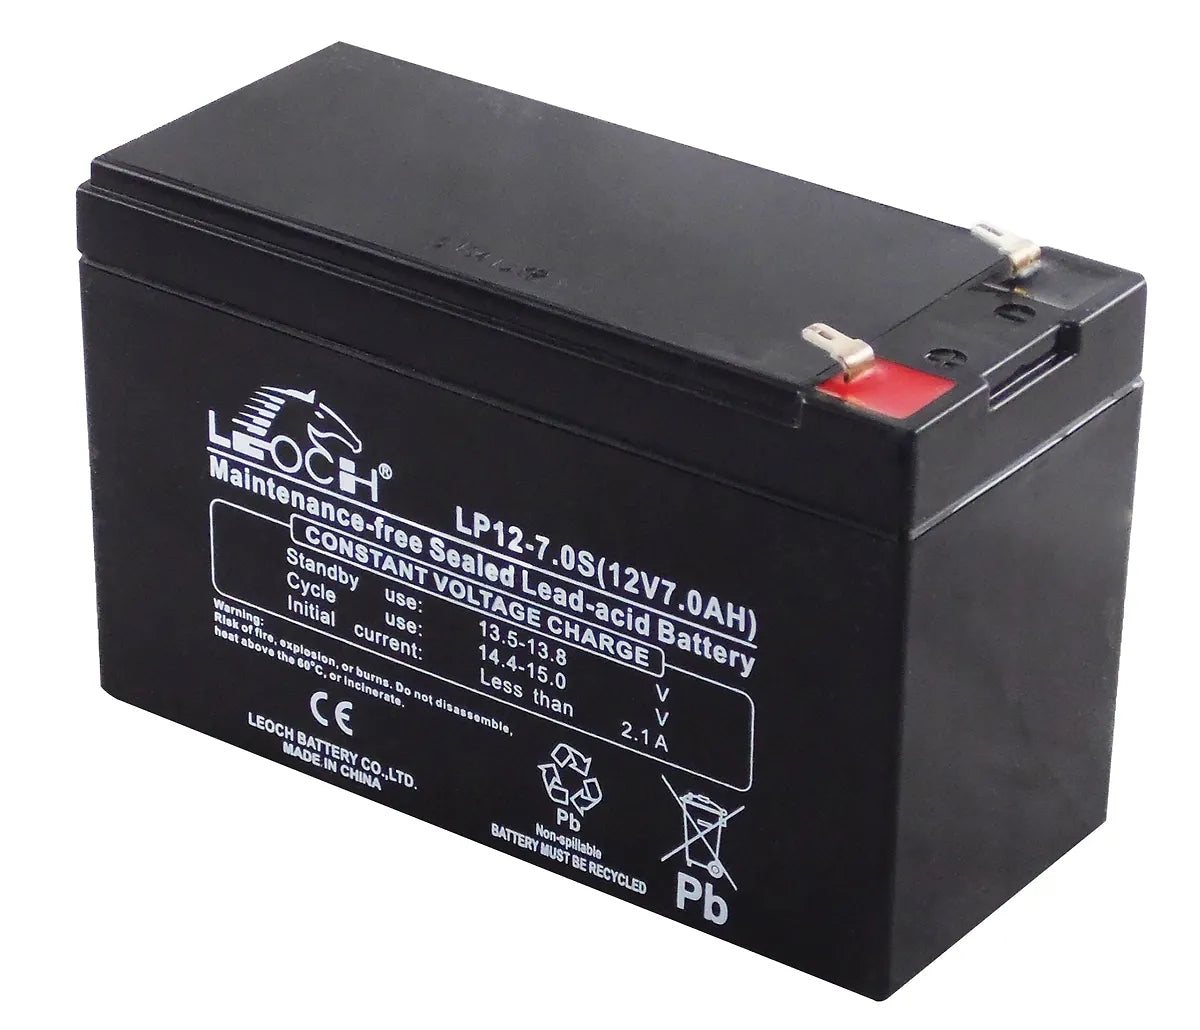 Leoch - LP12-7.0 (12 volt 7.0Ah Sealed Lead-Acid Battery)